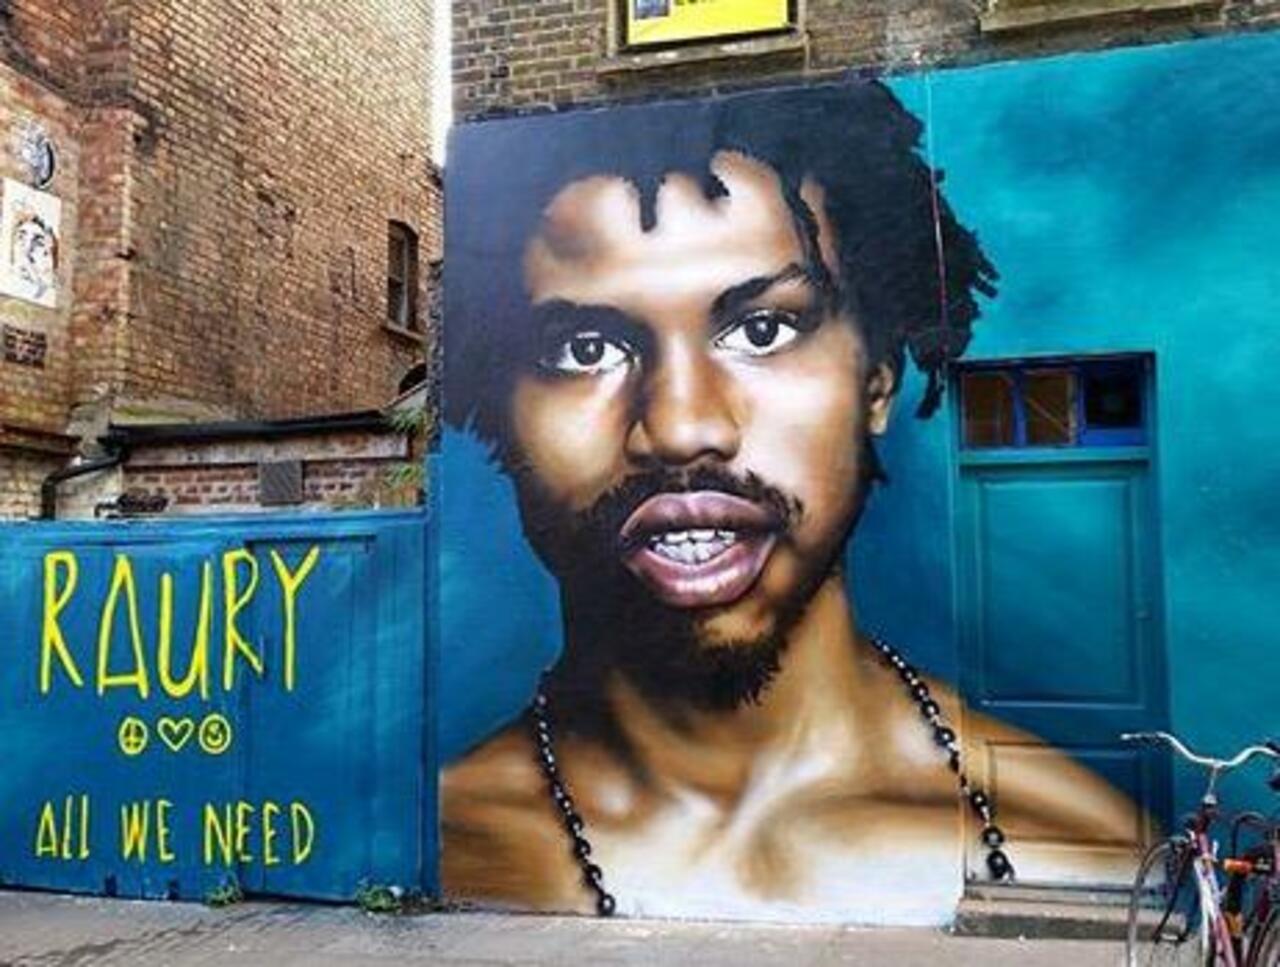 New Street Art of Raury by Olliver Switch in Brick Lane 

#art #graffiti #mural #streetart http://t.co/ivSFBgUS7U